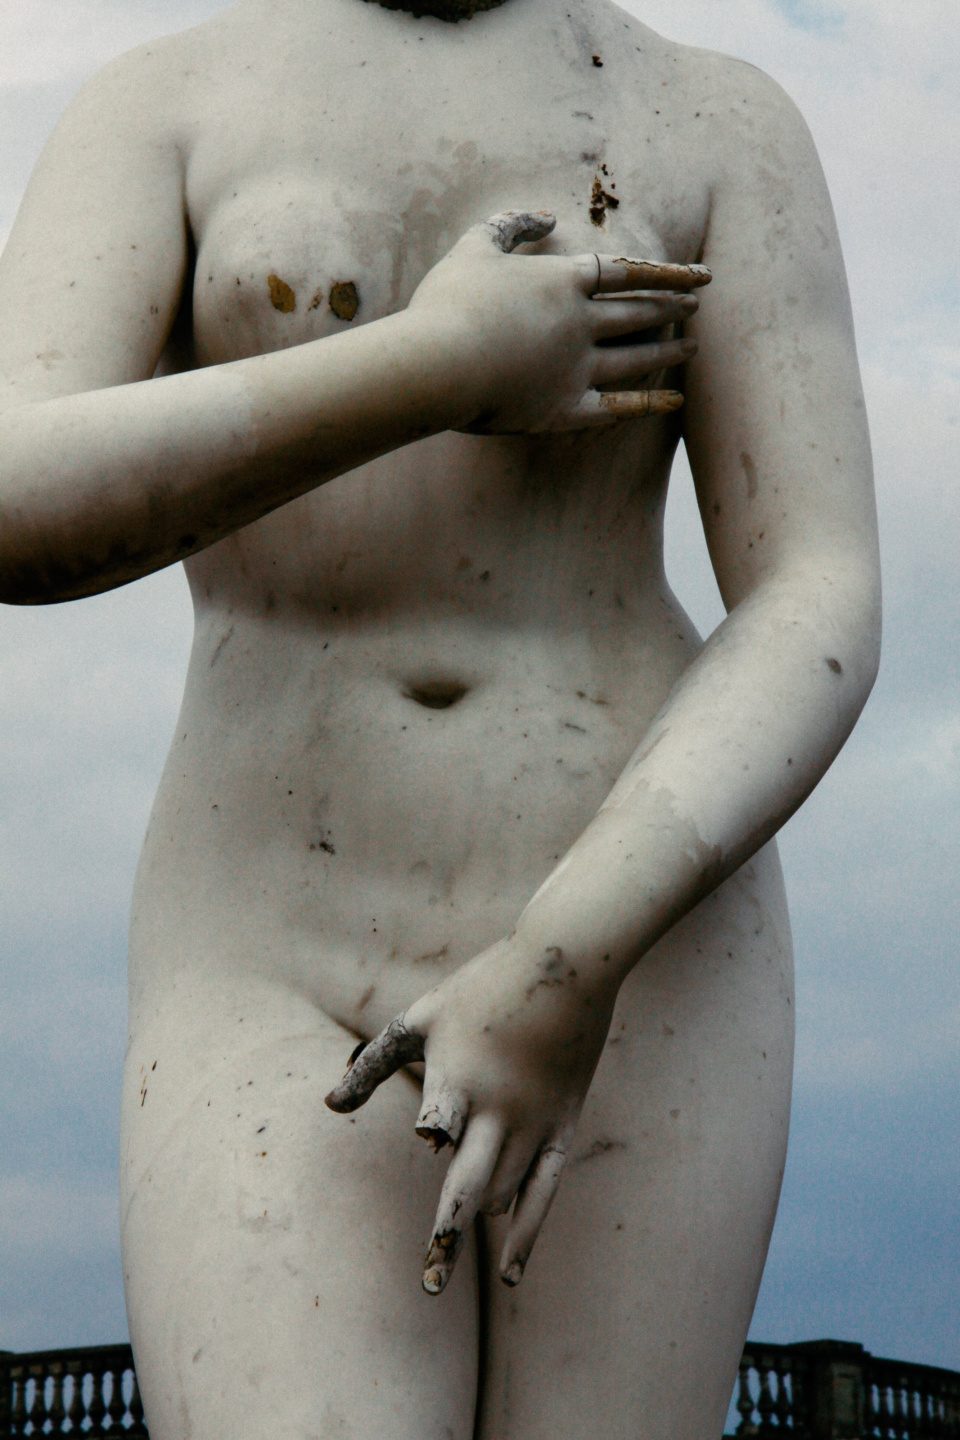 Naked broken sculpture